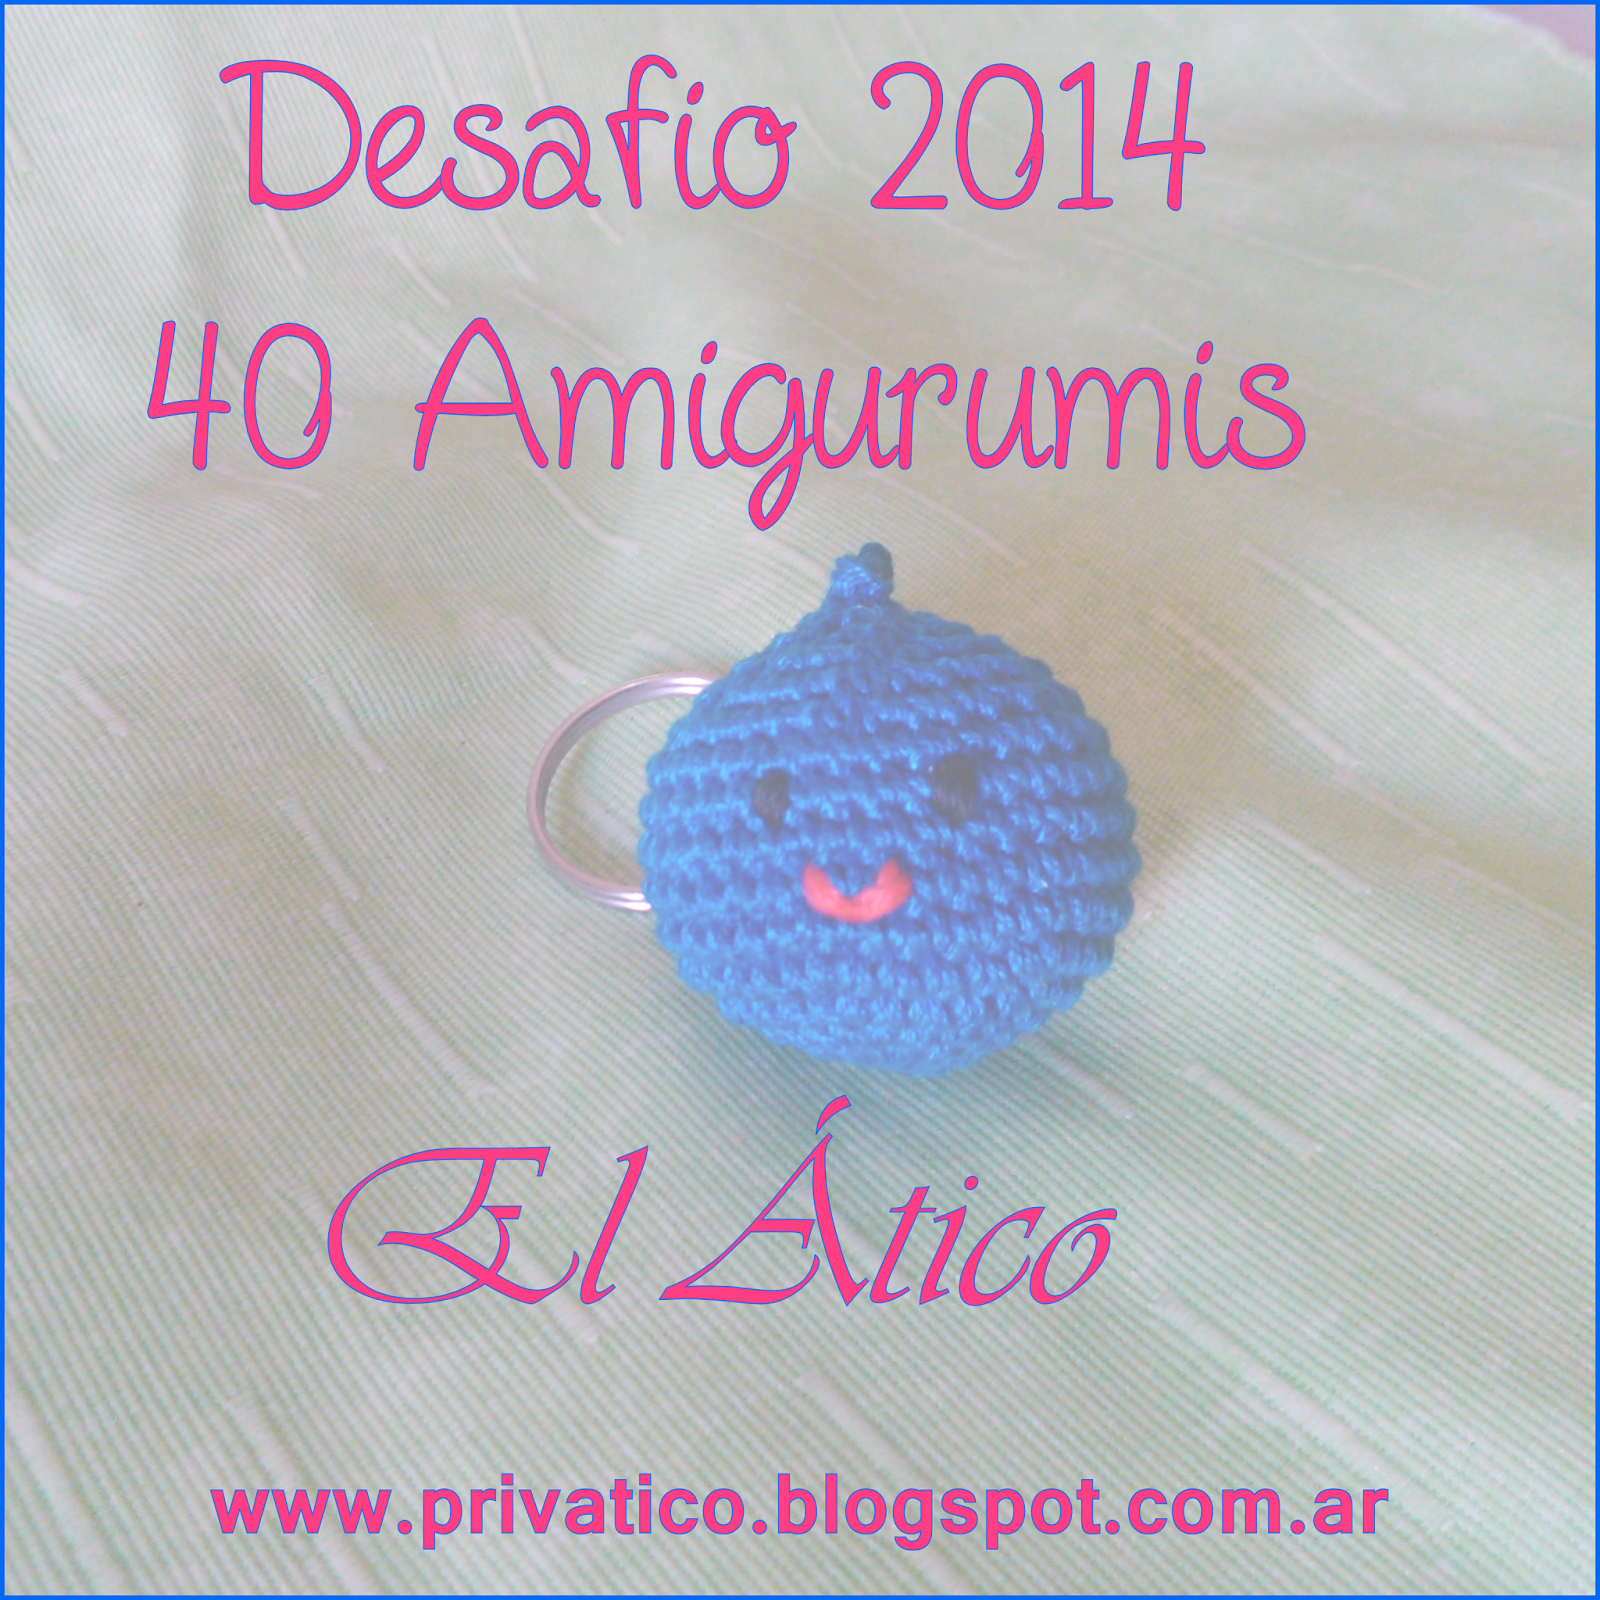 DESAFIO AMIGURUMIS 2014